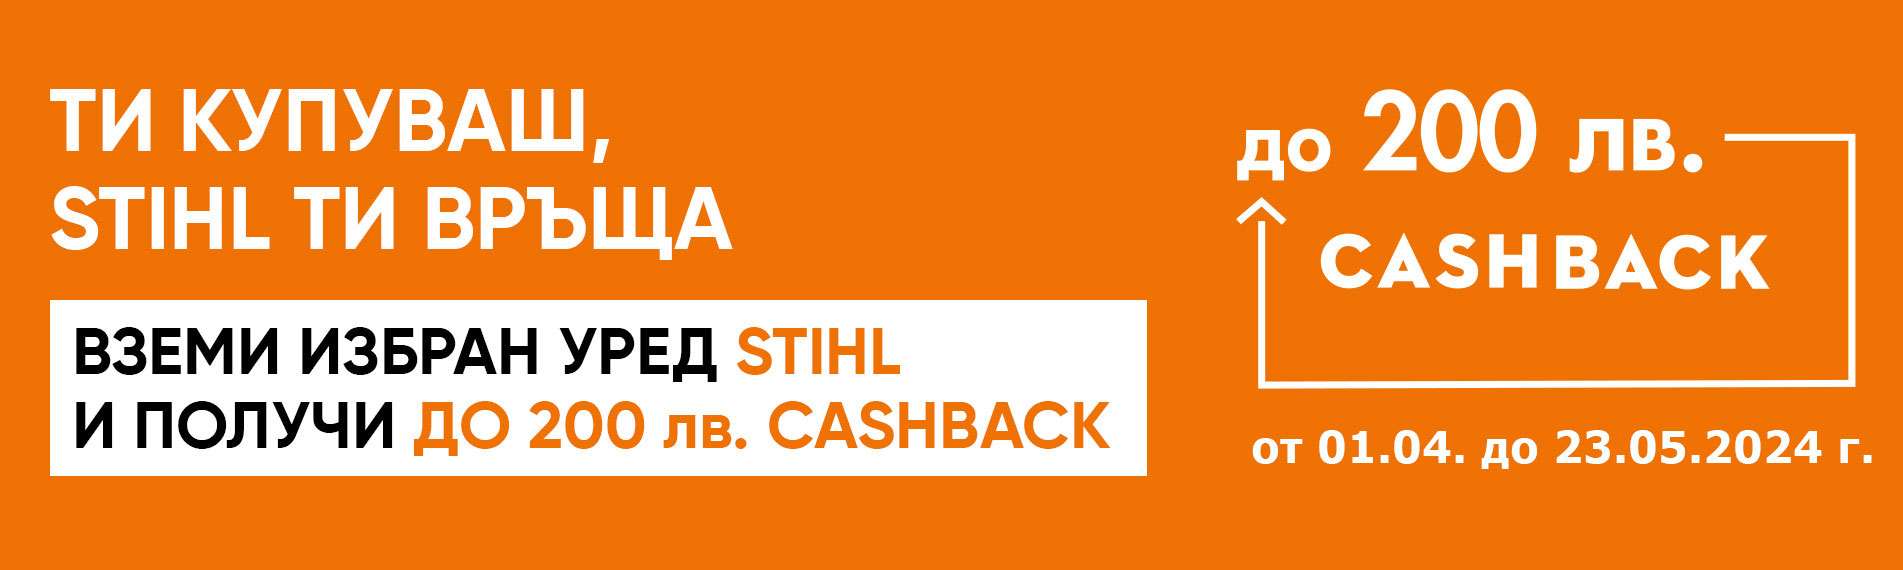 Промоция STIHL Cashback